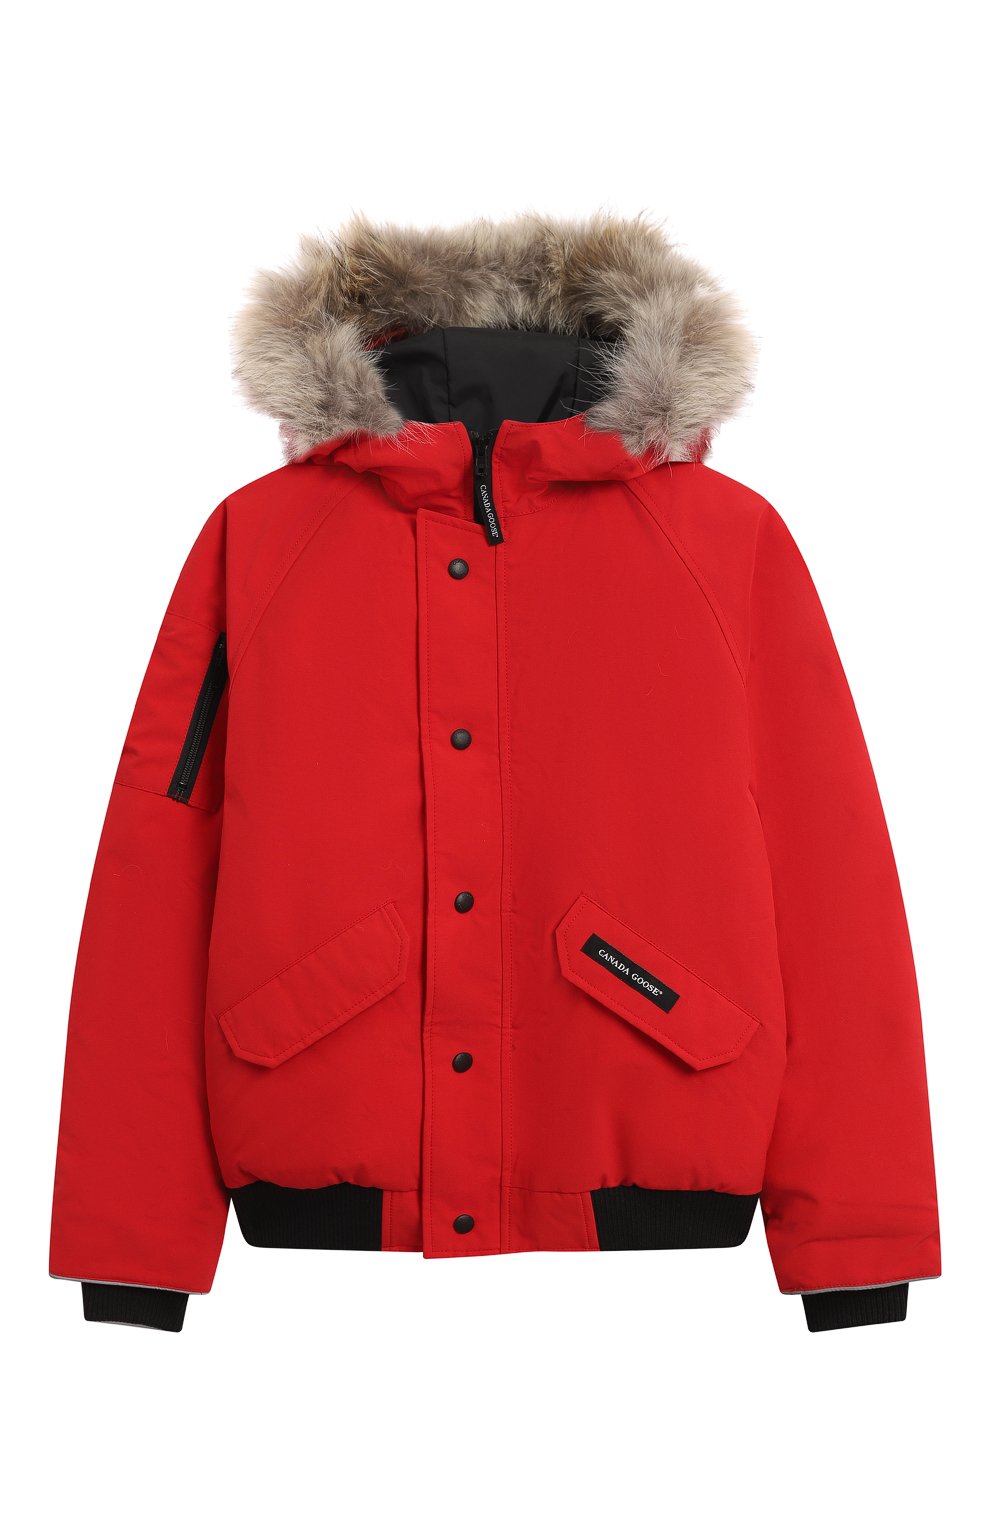 Фото Пуховая куртка Rundle CANADA GOOSE красного цвета Канада 7995Y 